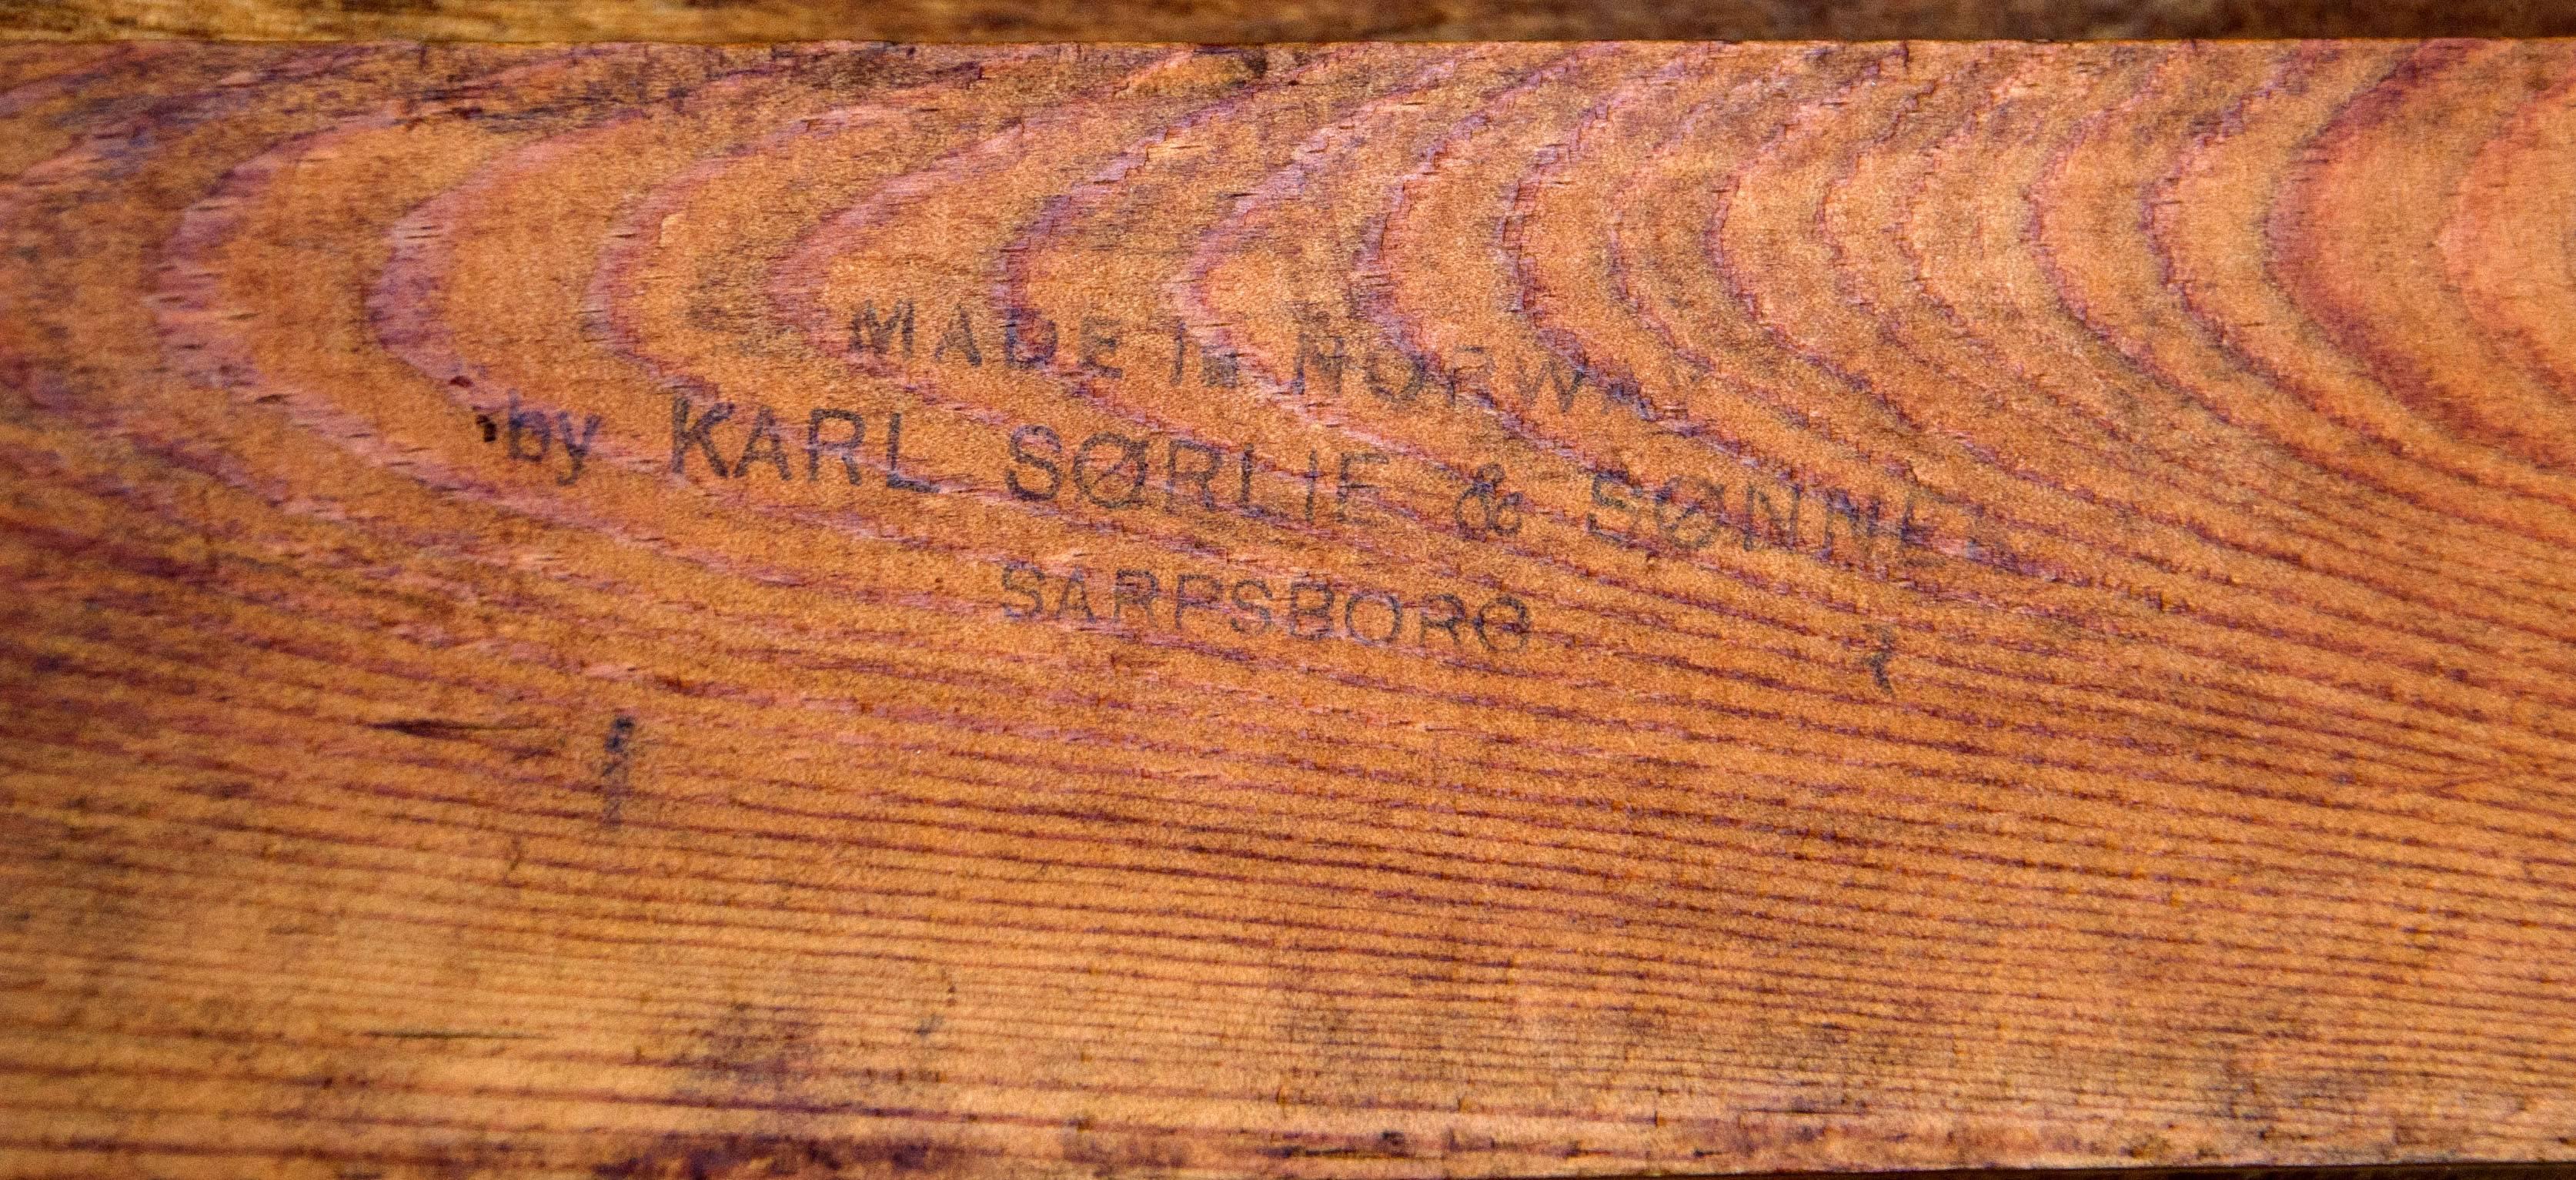 Walnut Mid-Century Modular Sofa, Karl Sorlie and Sonner Sarpsbord, Norway